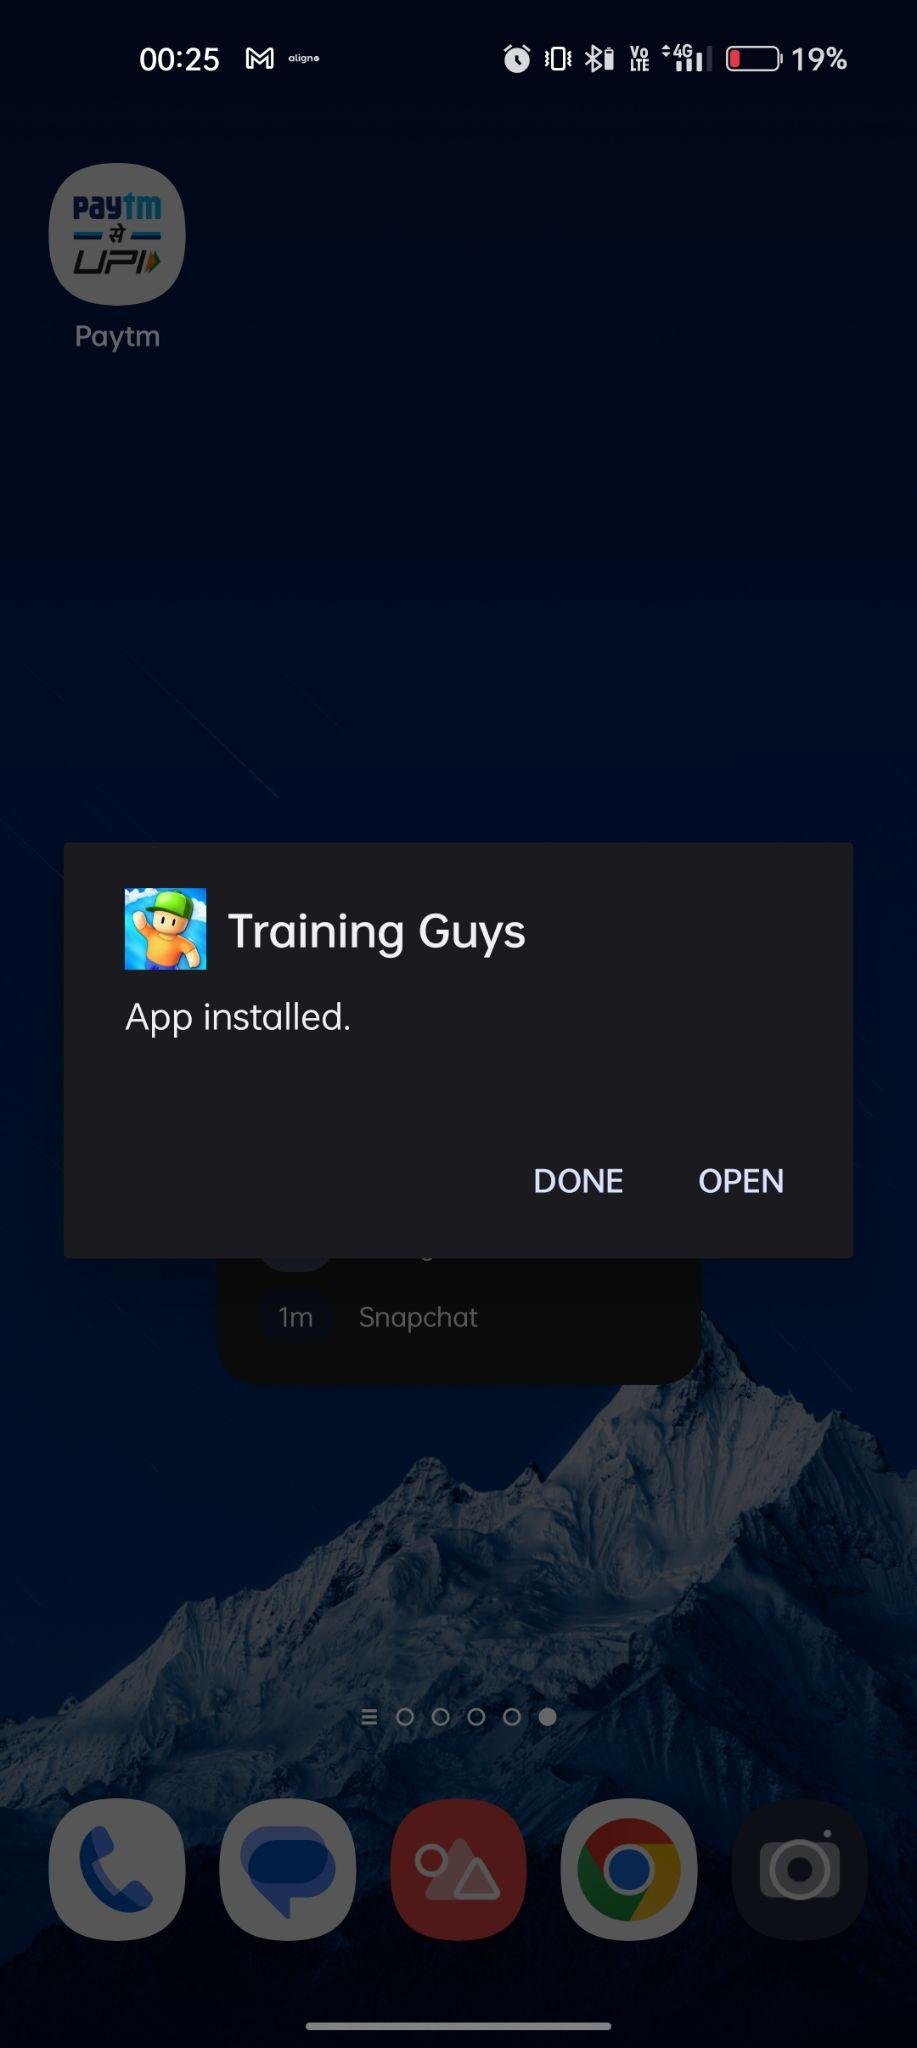 Training Guys apk installed